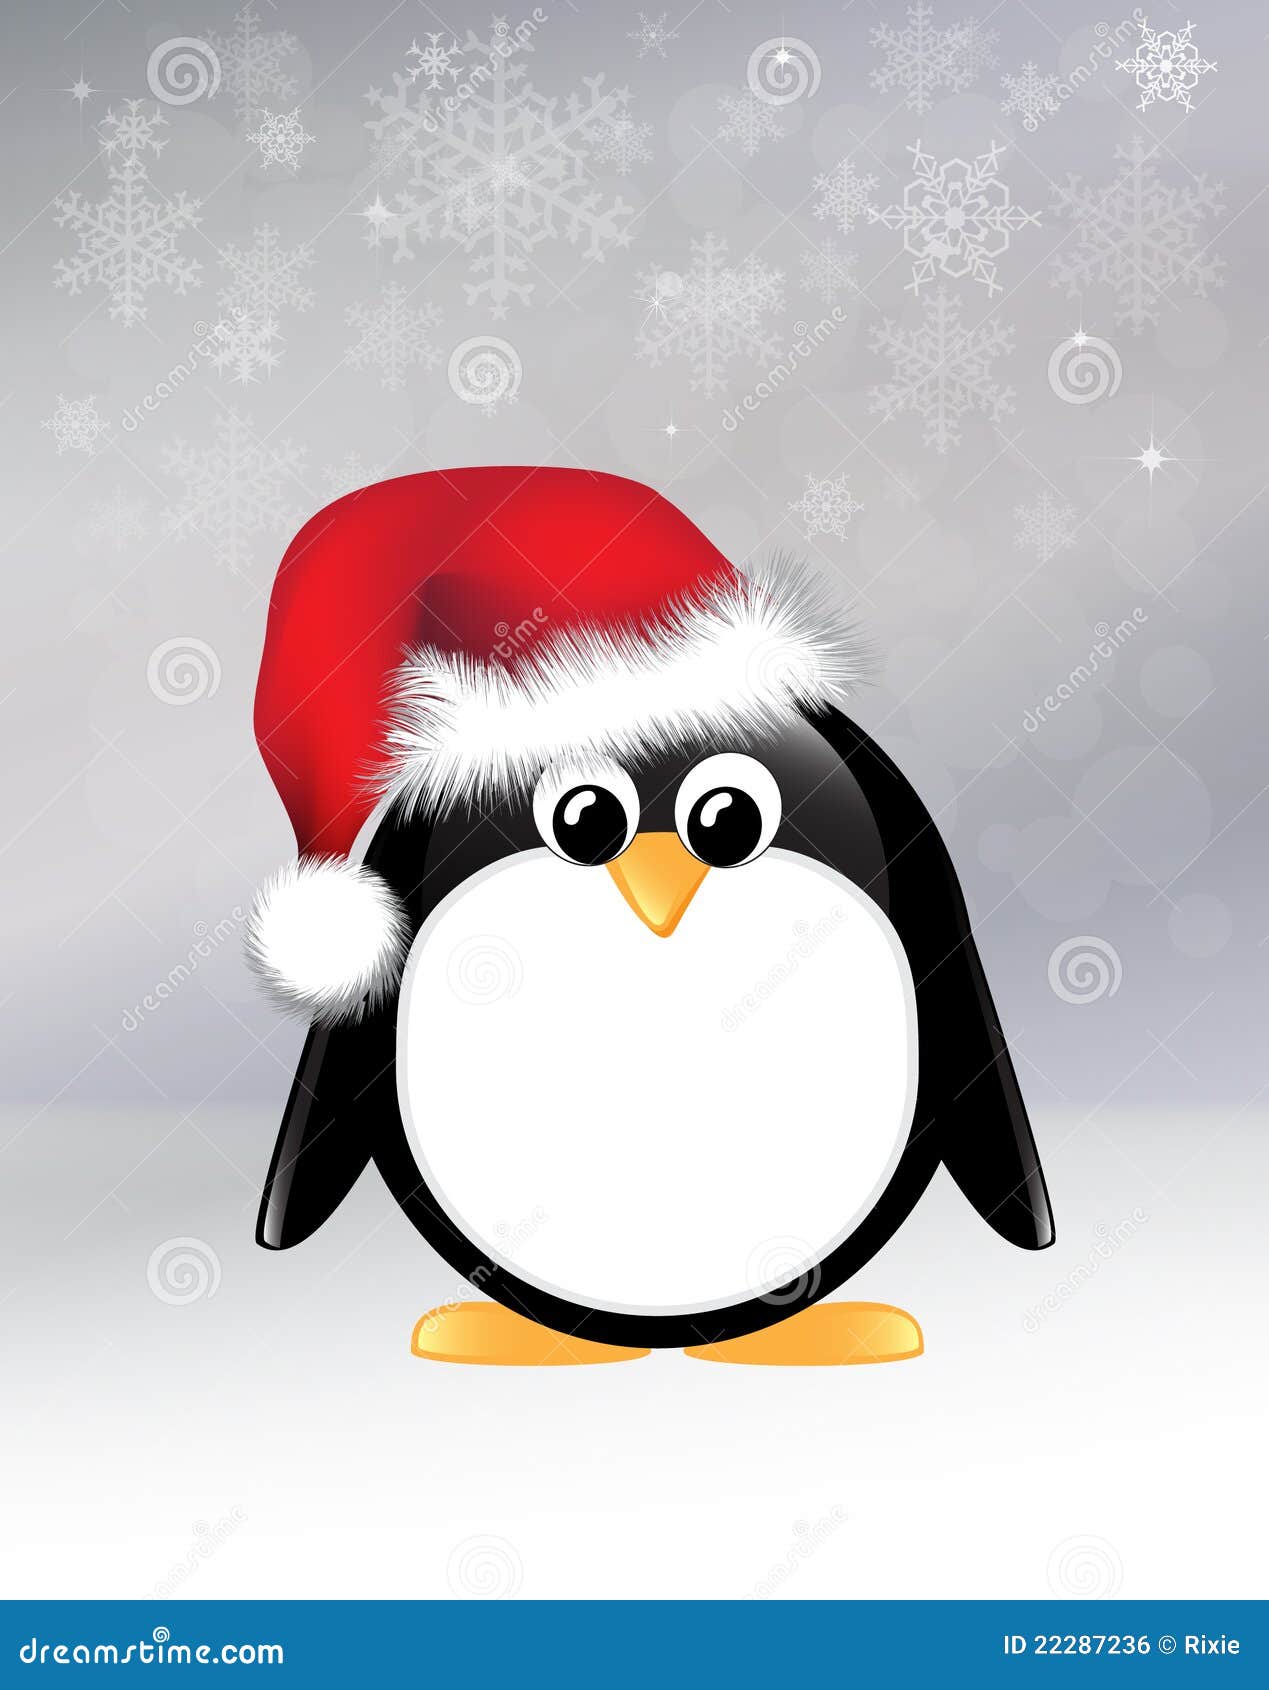 royalty free stock image christmas penguin image